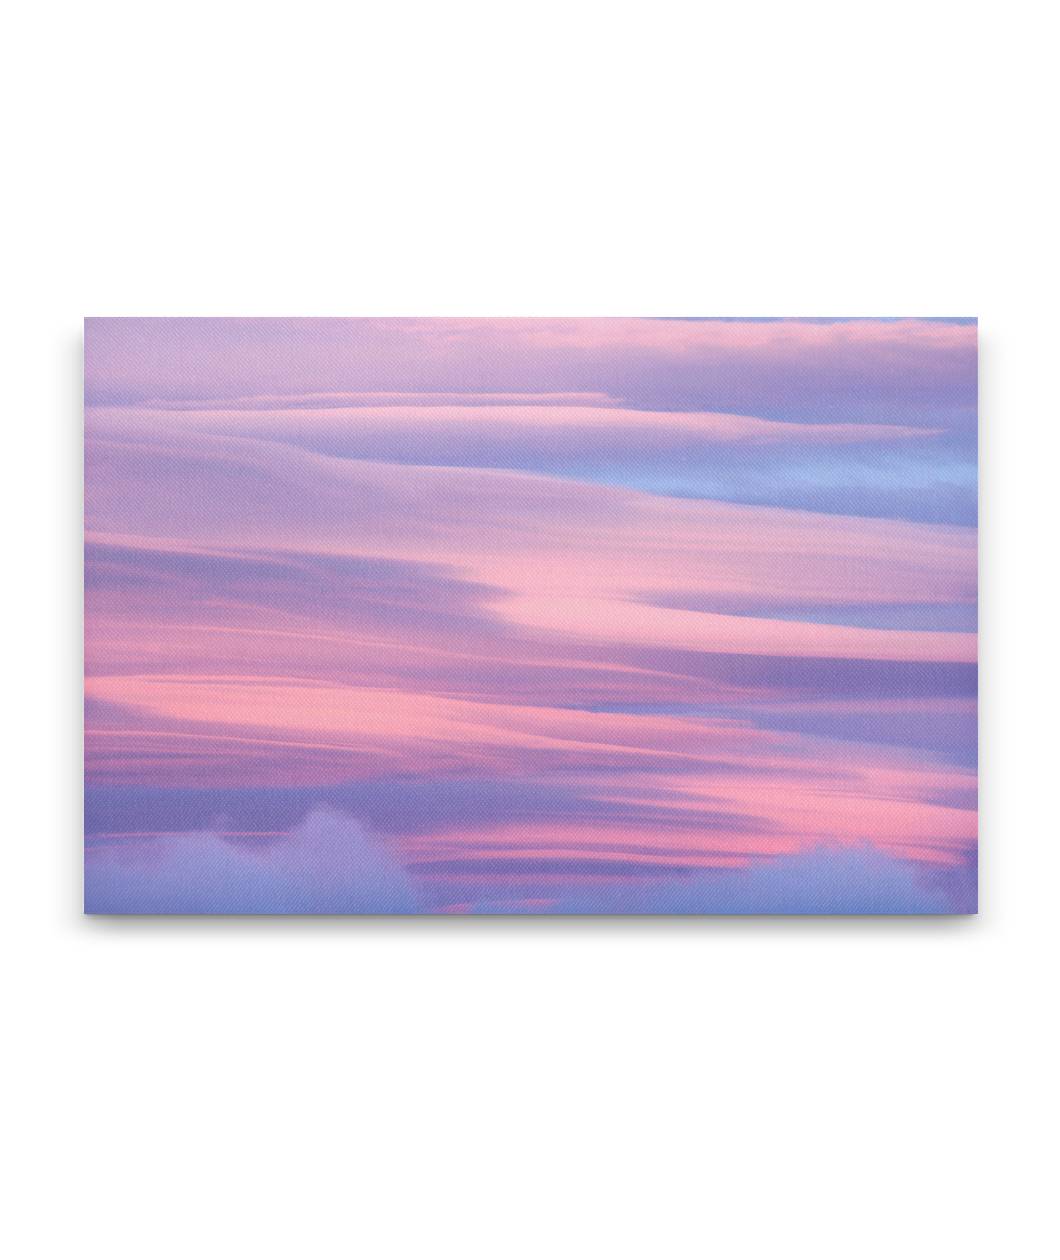 Pink lenticular clouds, Carpenter Mountain, Oregon